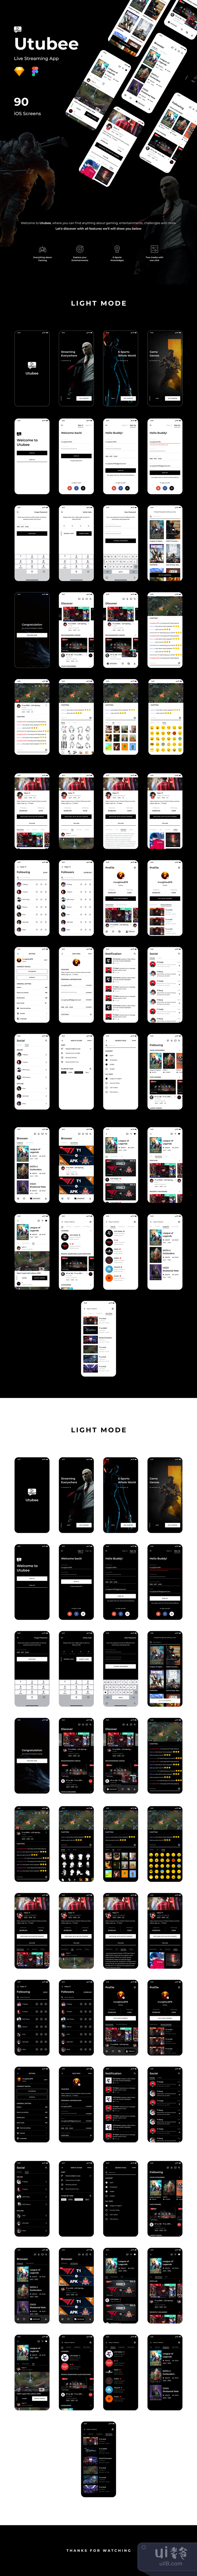 Utubee - 实时流媒体应用程序 (Utubee - Live Streaming App)插图